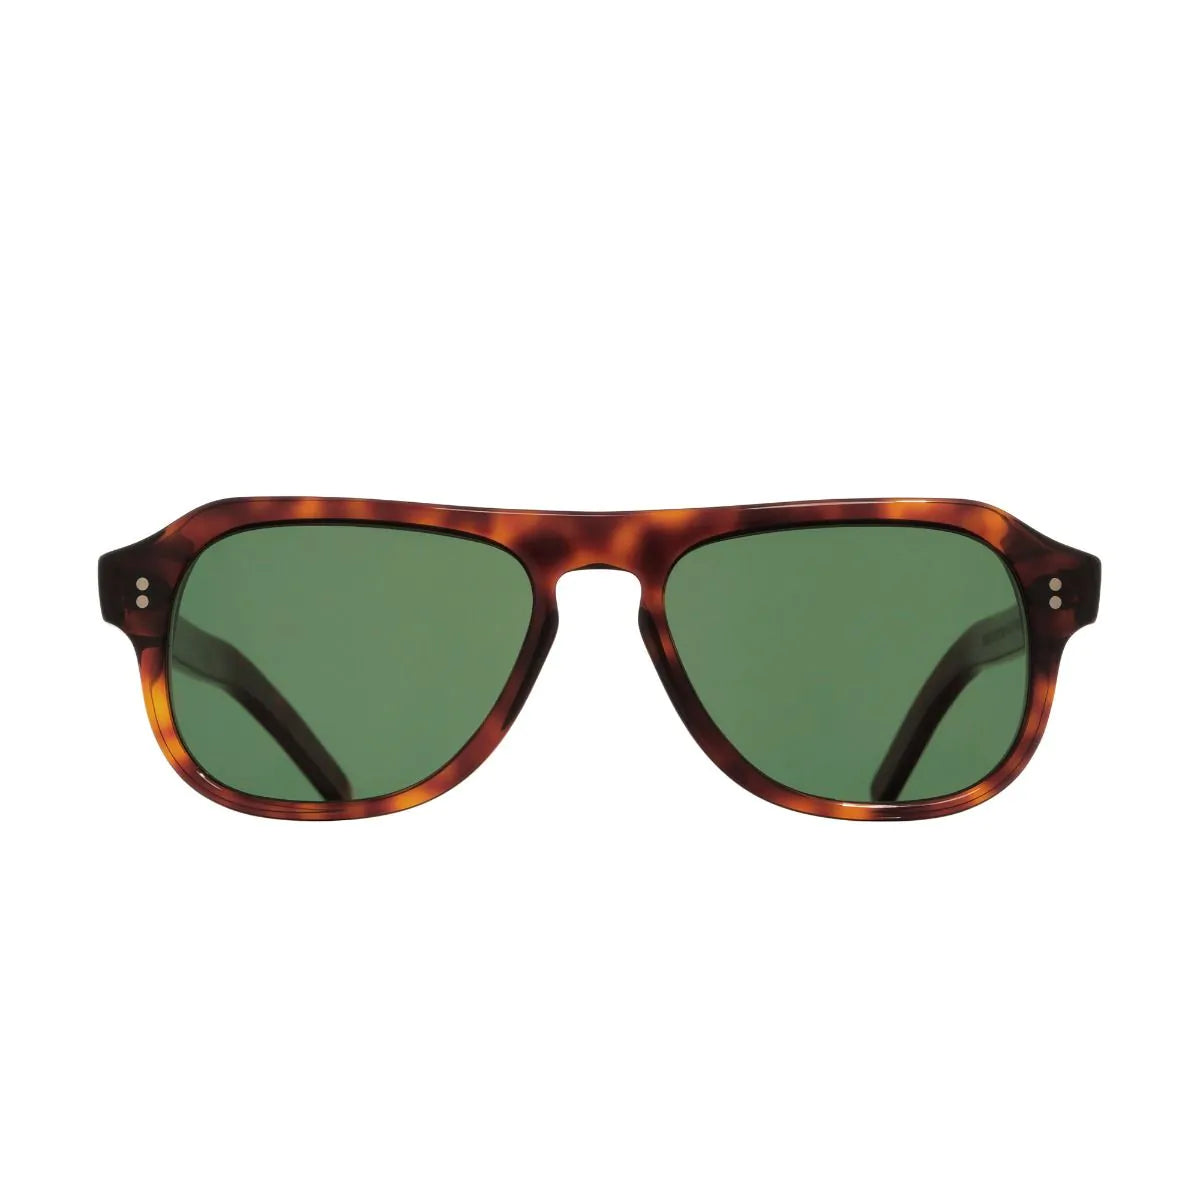 0822V2 Aviator Sunglasses - Dark Turtle / Dark Green